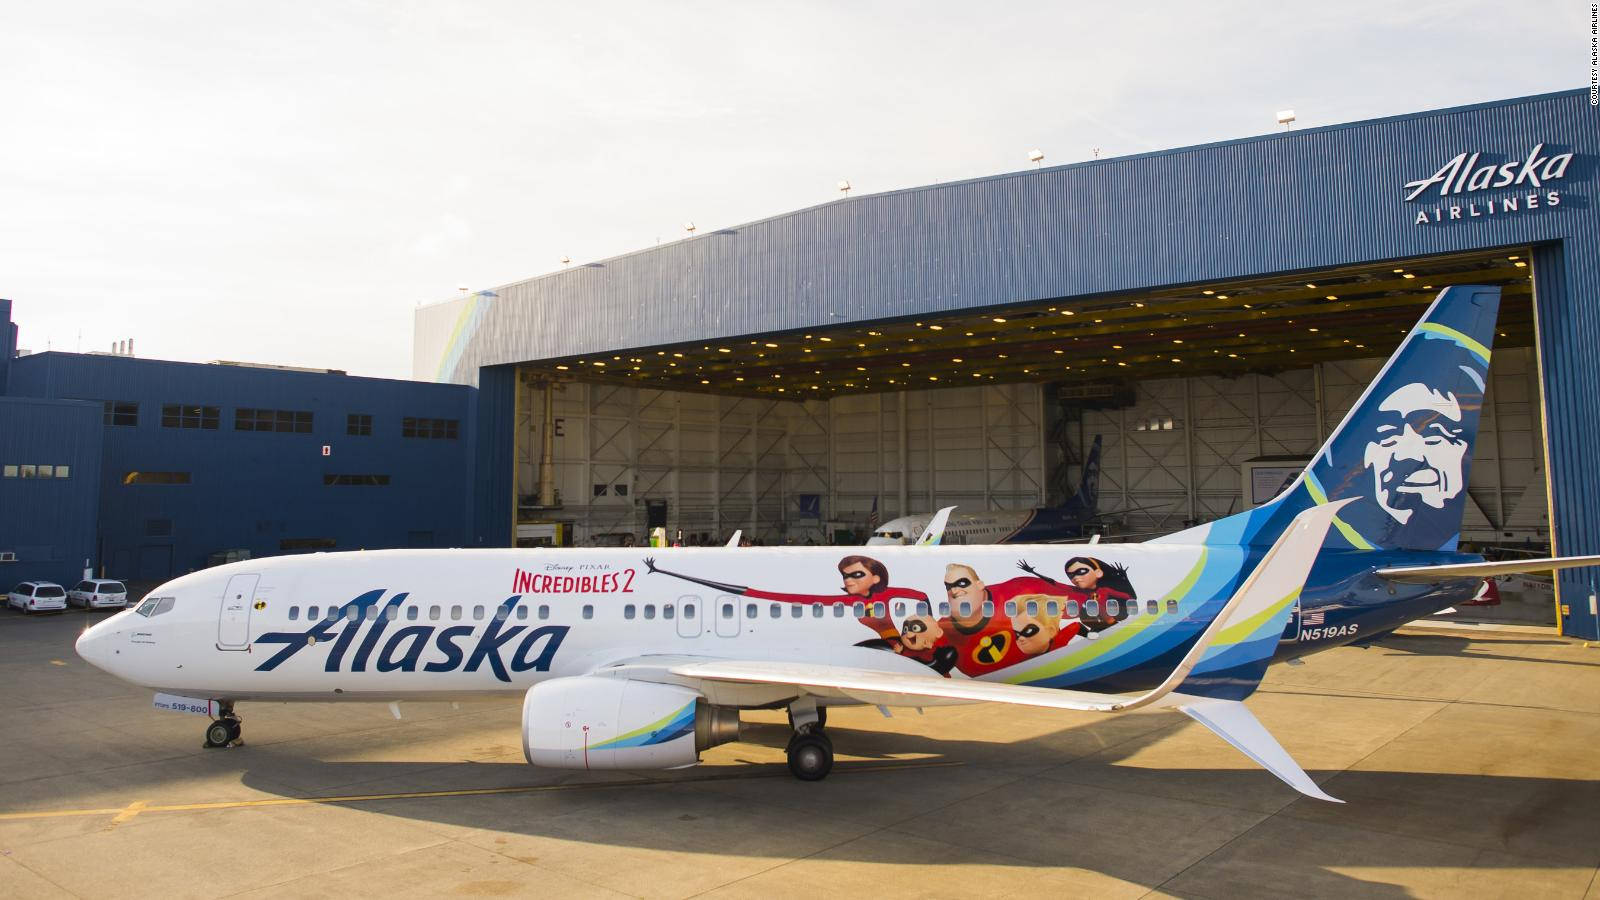 Alaska Airlines The Incredibles Plane Wallpaper